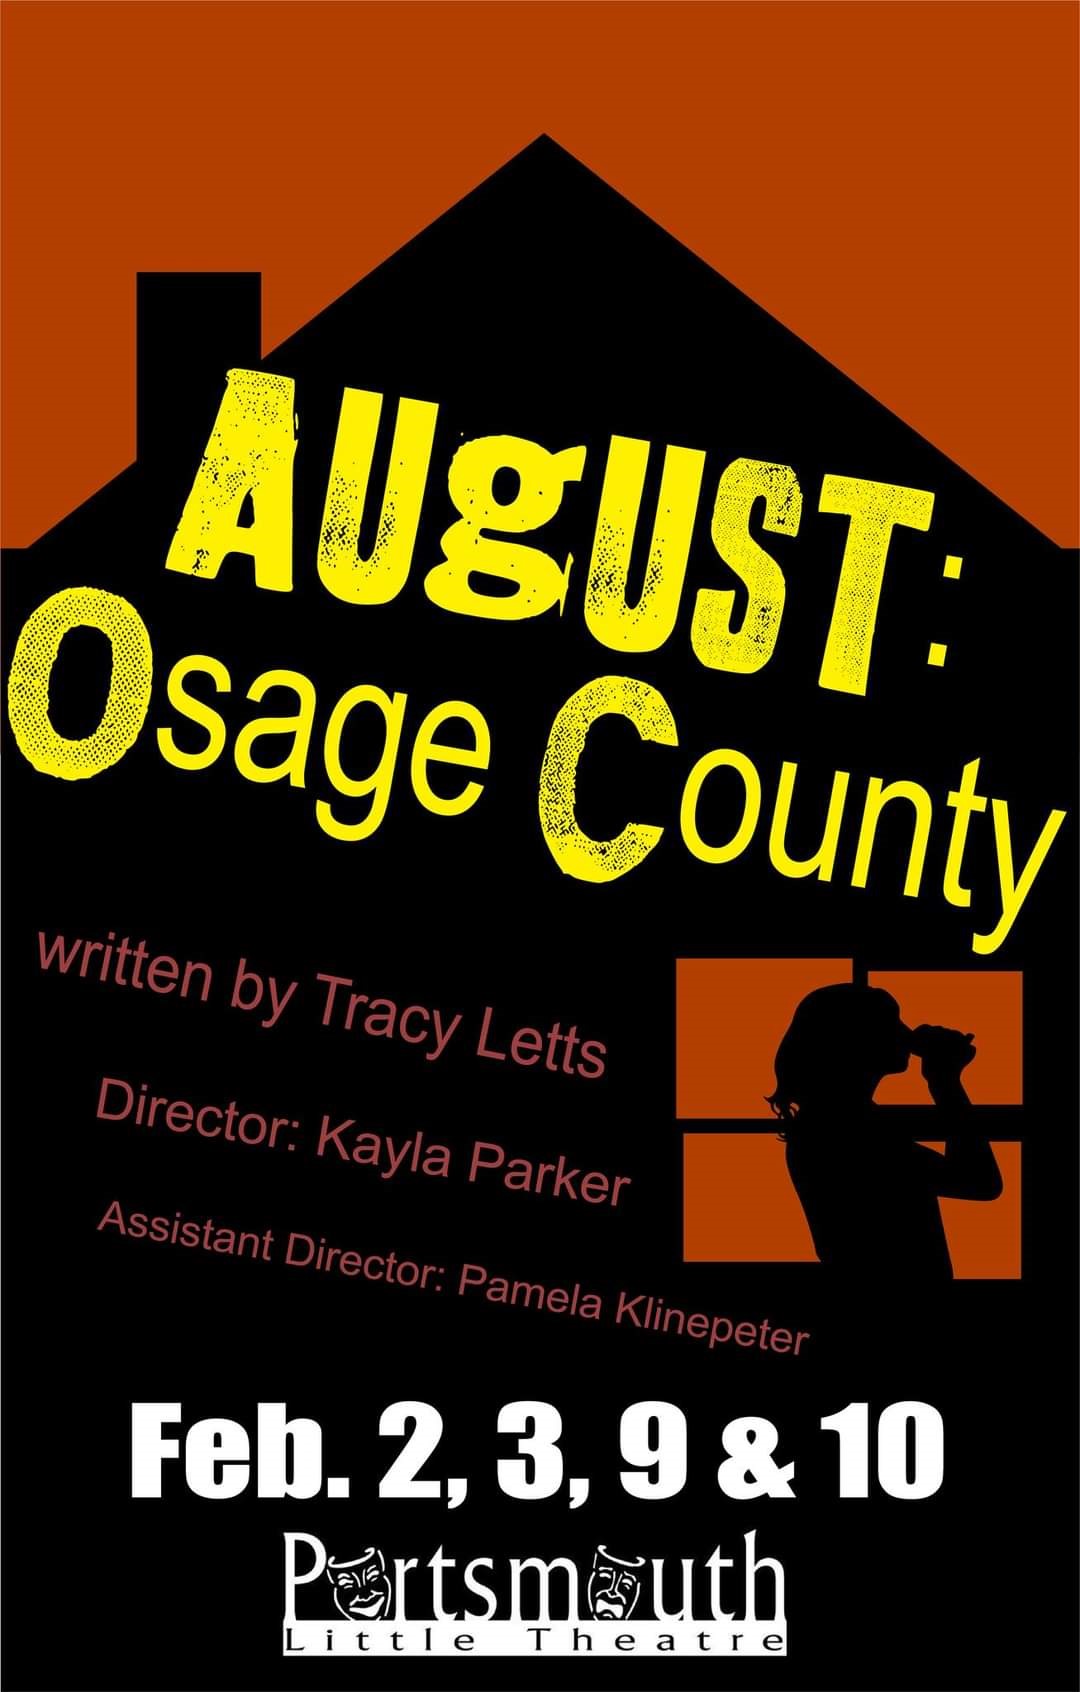 August: Osage County  on feb. 03, 19:30@Portsmouth Little Theatre - Elegir asientoCompra entradas y obtén información enPortsmouth Little Theatre 